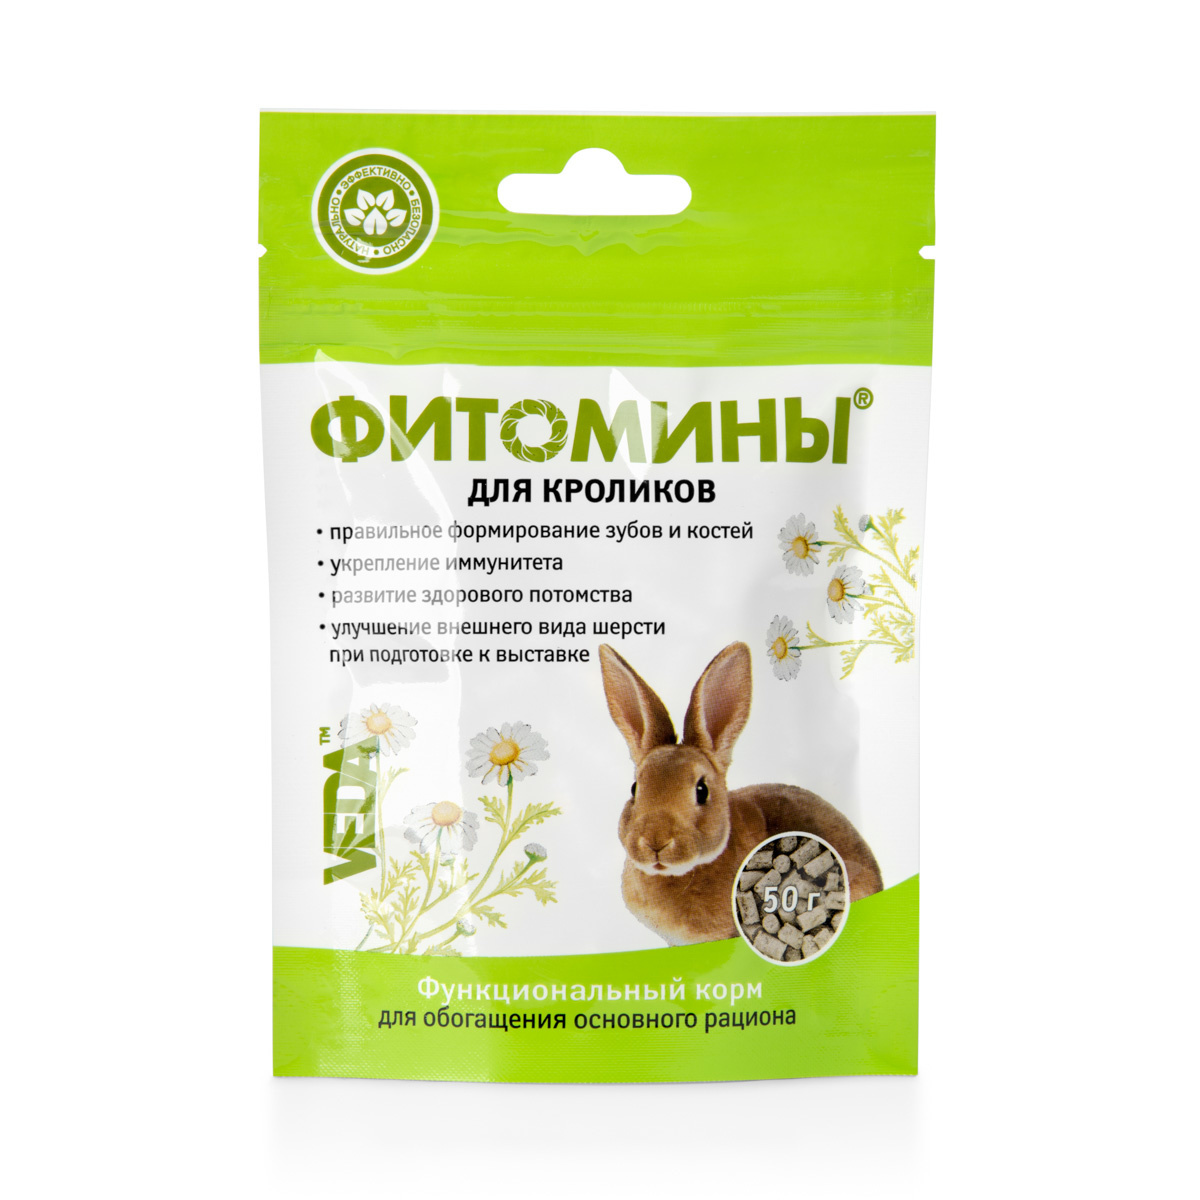 Веда фитомины для кроликов (50 г) Веда фитомины для кроликов (50 г) - фото 1